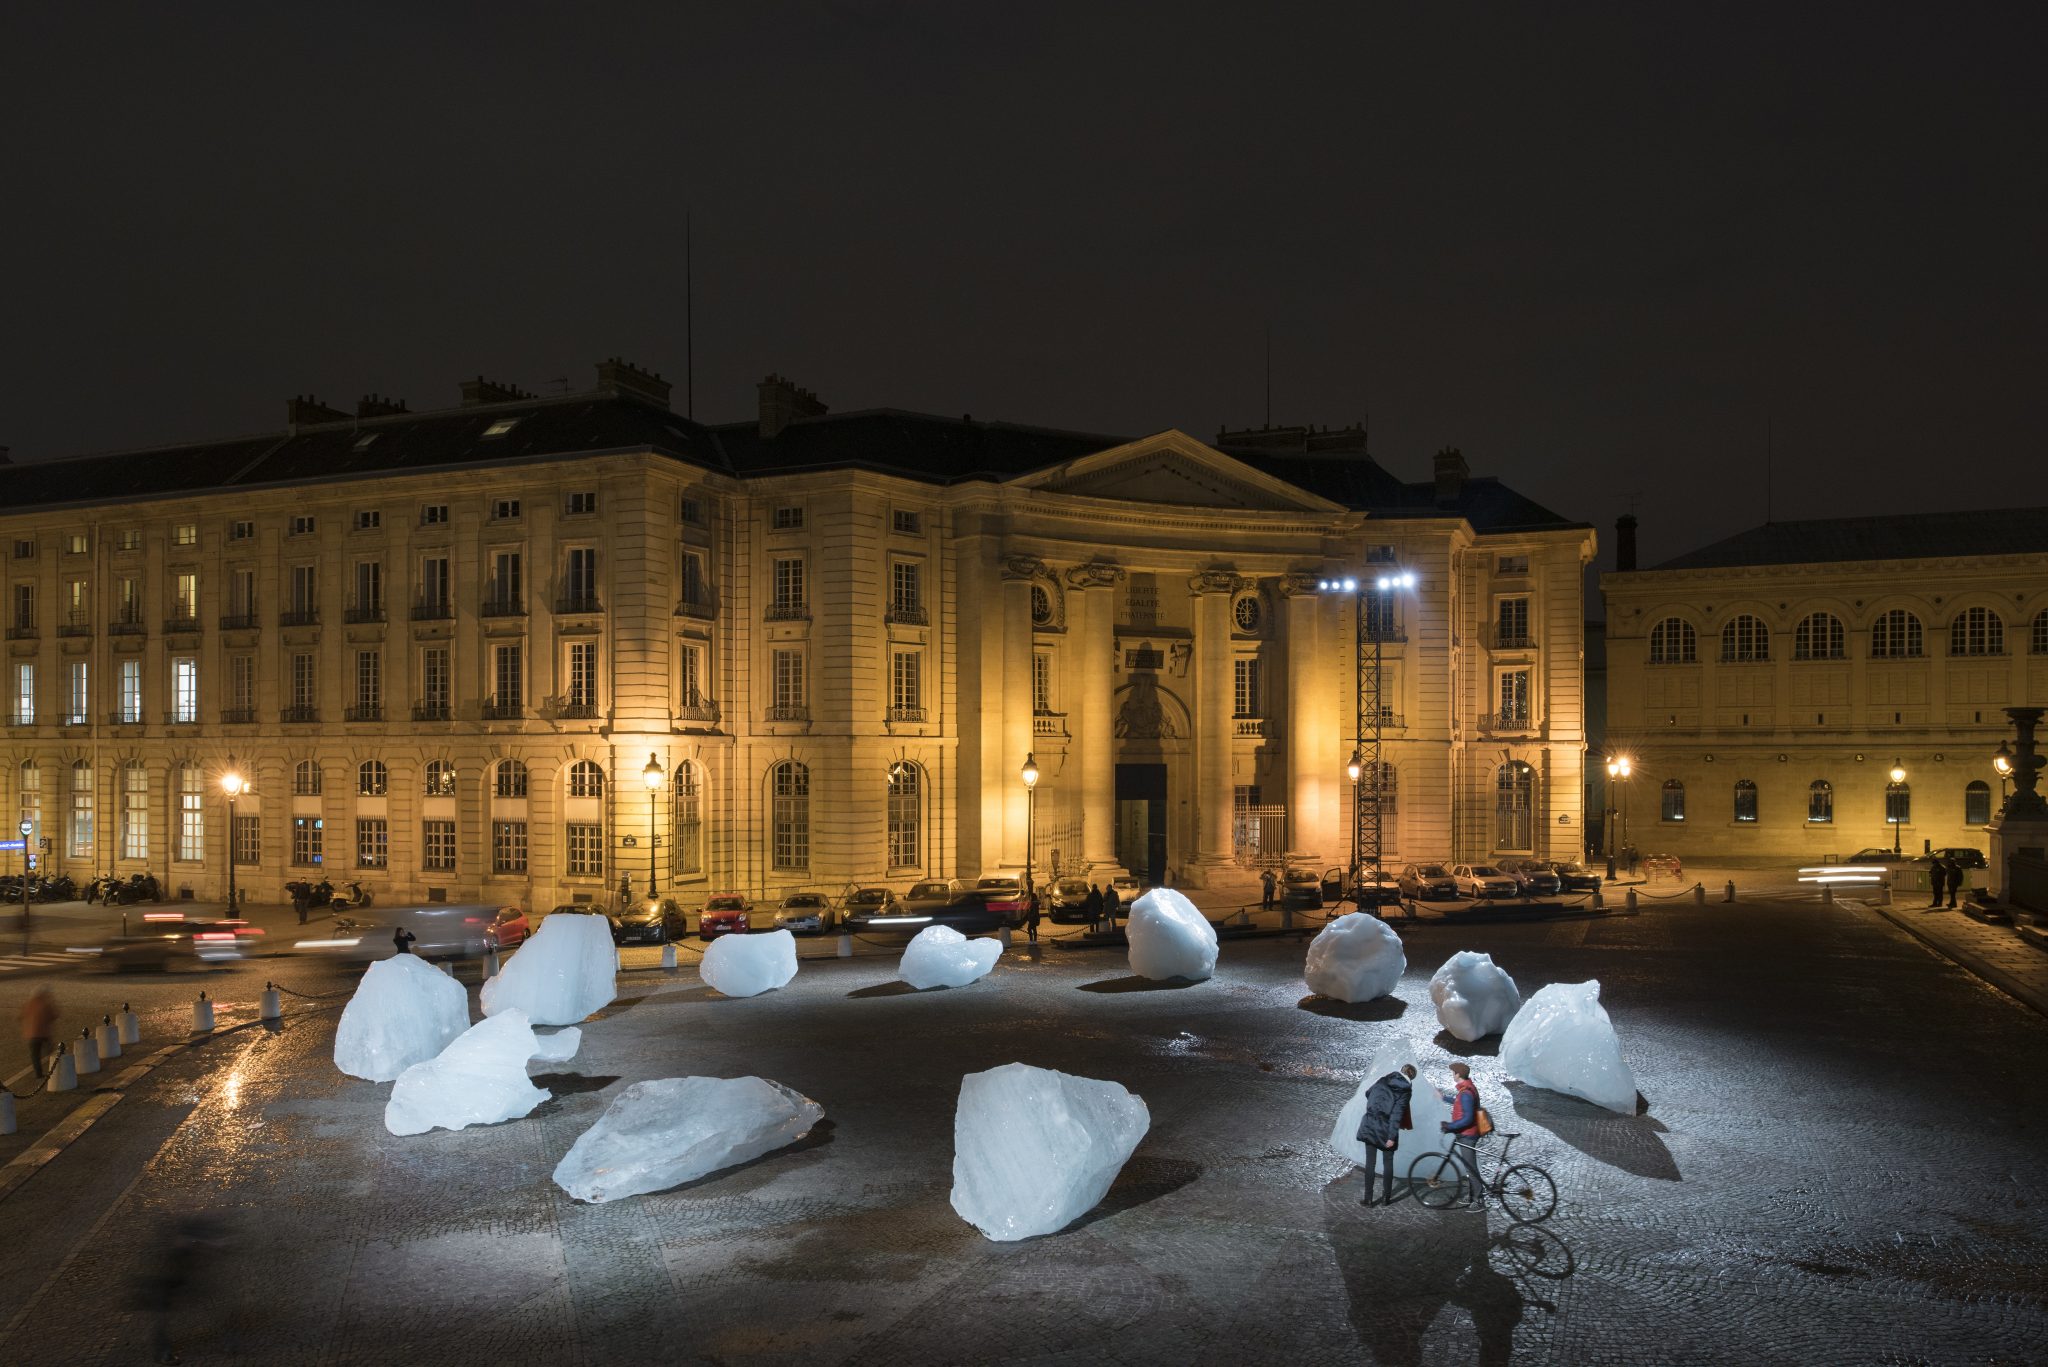 Olafur Eliasson and Minik Rosing, Ice Watch, 2014. Twelve ice blocks, Place du Panthéon, Paris, 2015. Photo by Martin Argyroglo. Courtesy of the artist, neugerriemschneider and Tanya Bonakdar Gallery